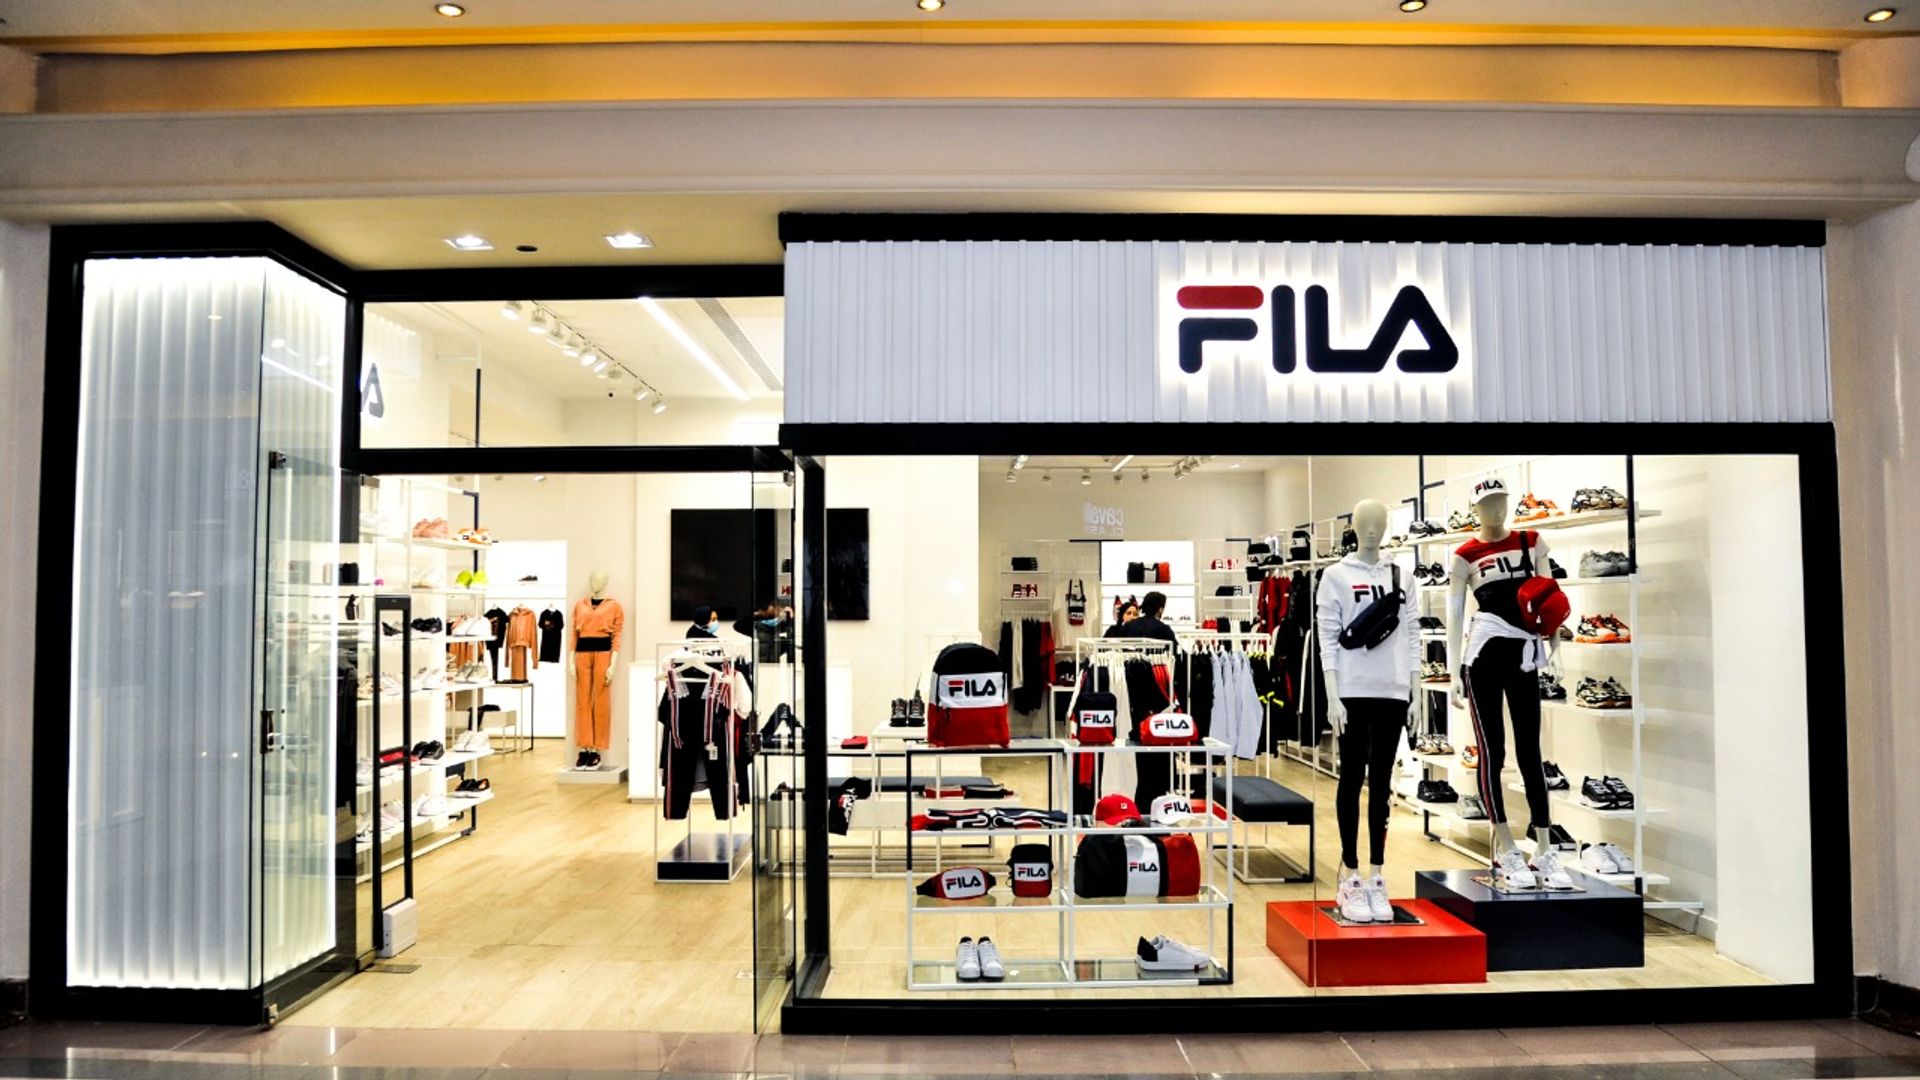 Marketing Strategies and Marketing Mix of Fila - The Brand Hopper